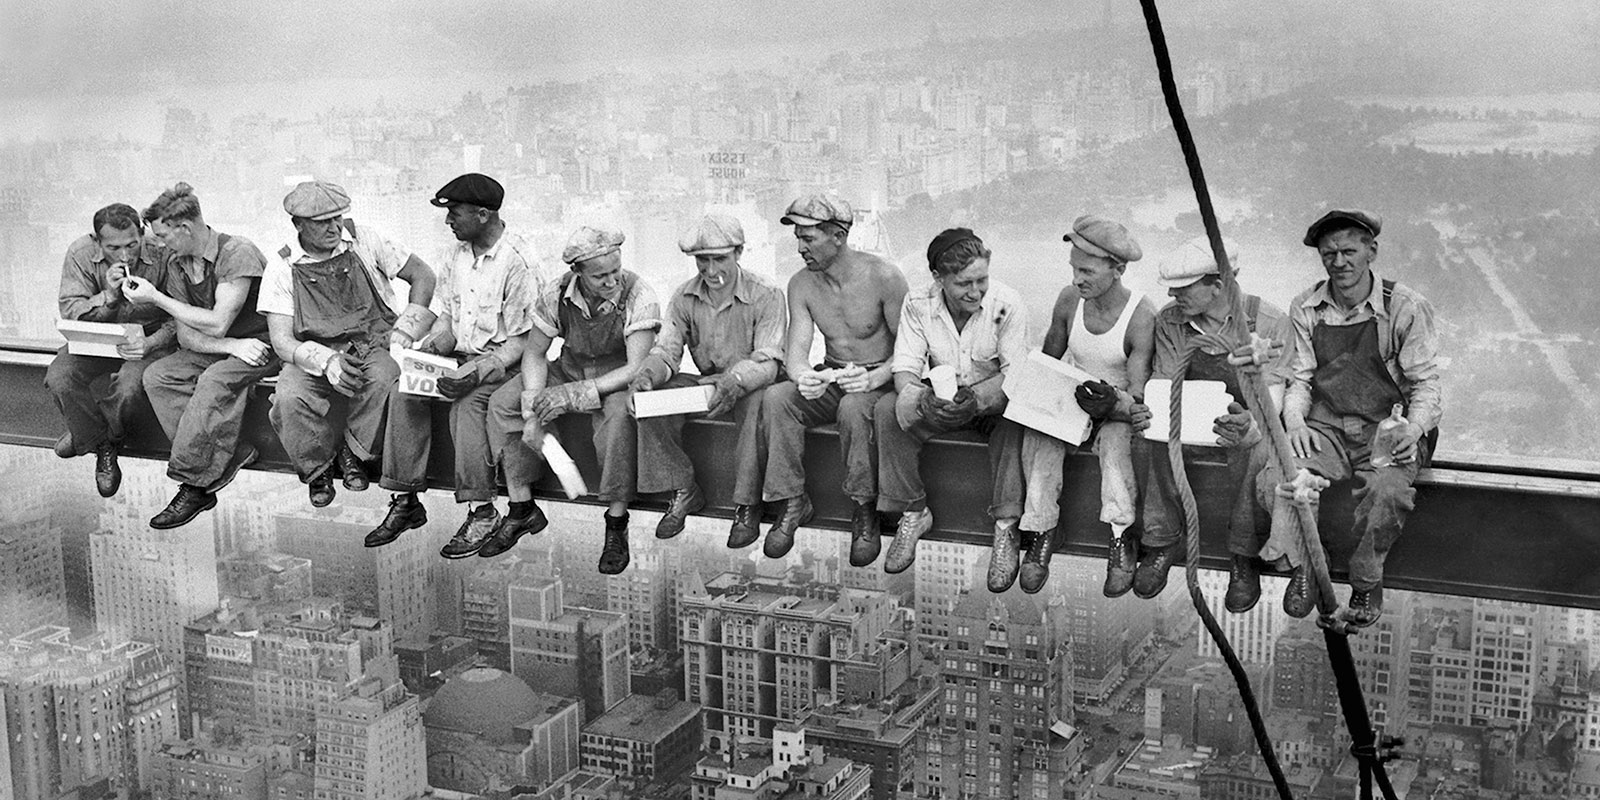 Celebrate Labor Day! "Lunch Atop a Skyscraper" Rockefeller Center. Charles Ebbets (1932)